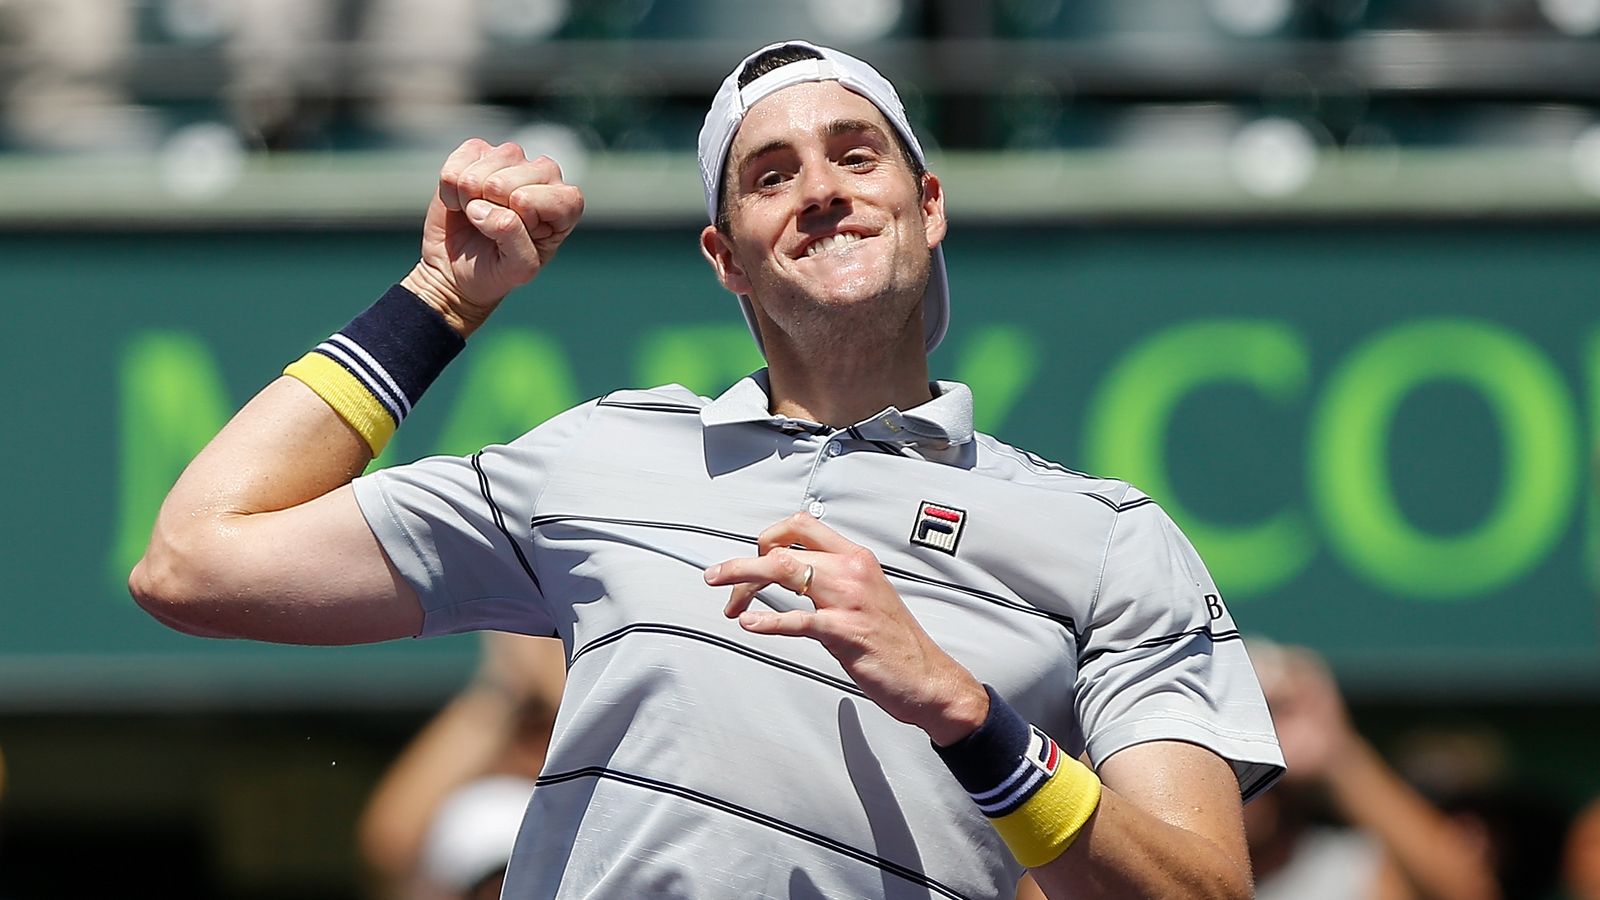 John Isner defeats Juan Martin del Potro to reach Miami Open final with